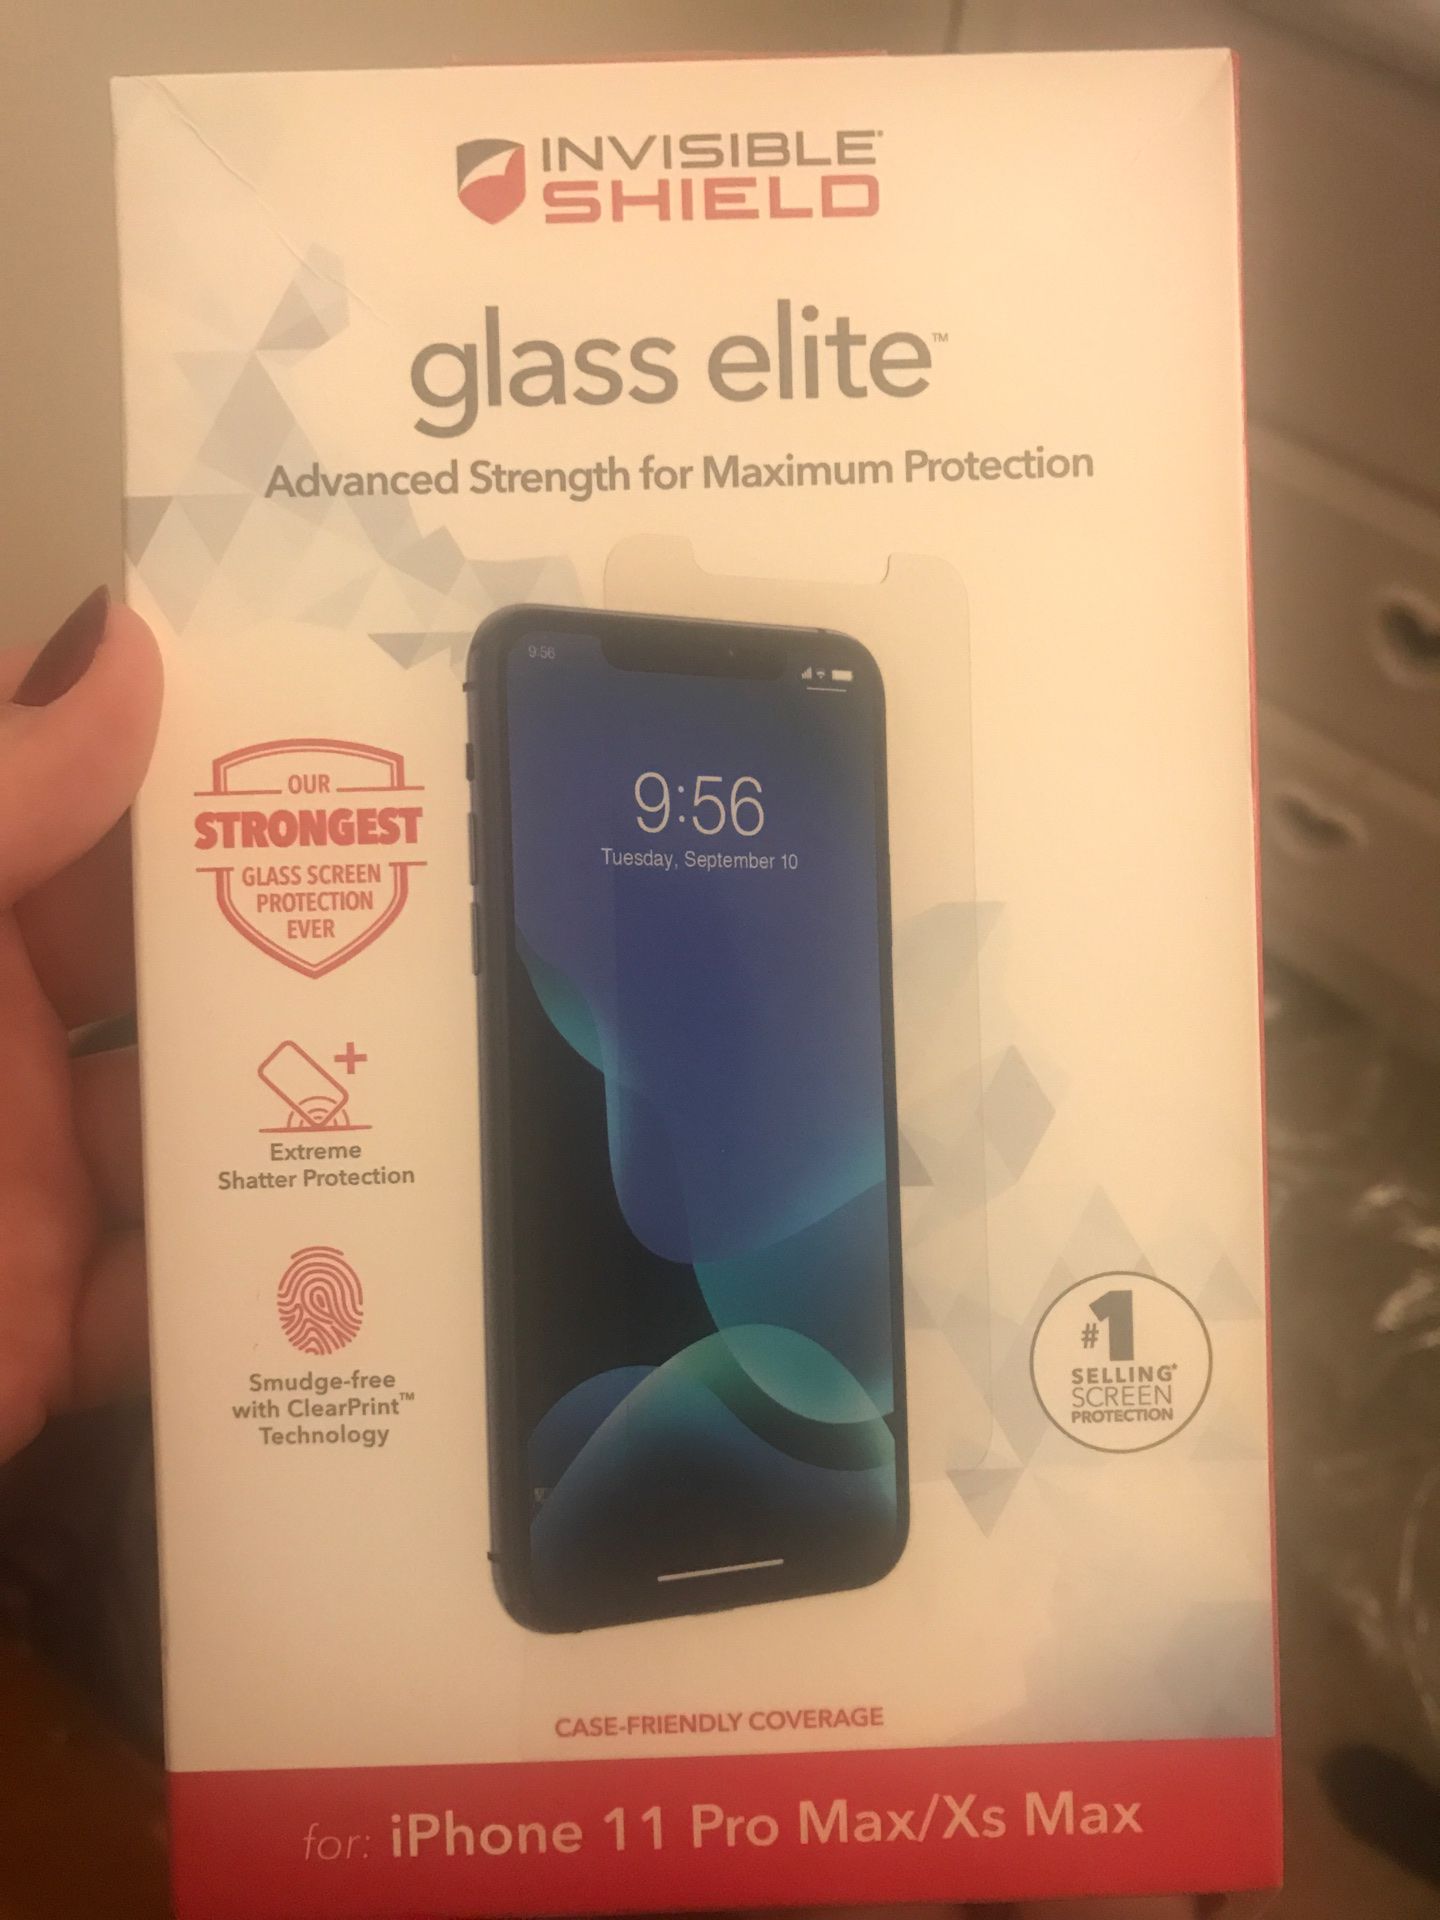 iPhone 11 Pro Max glass shield